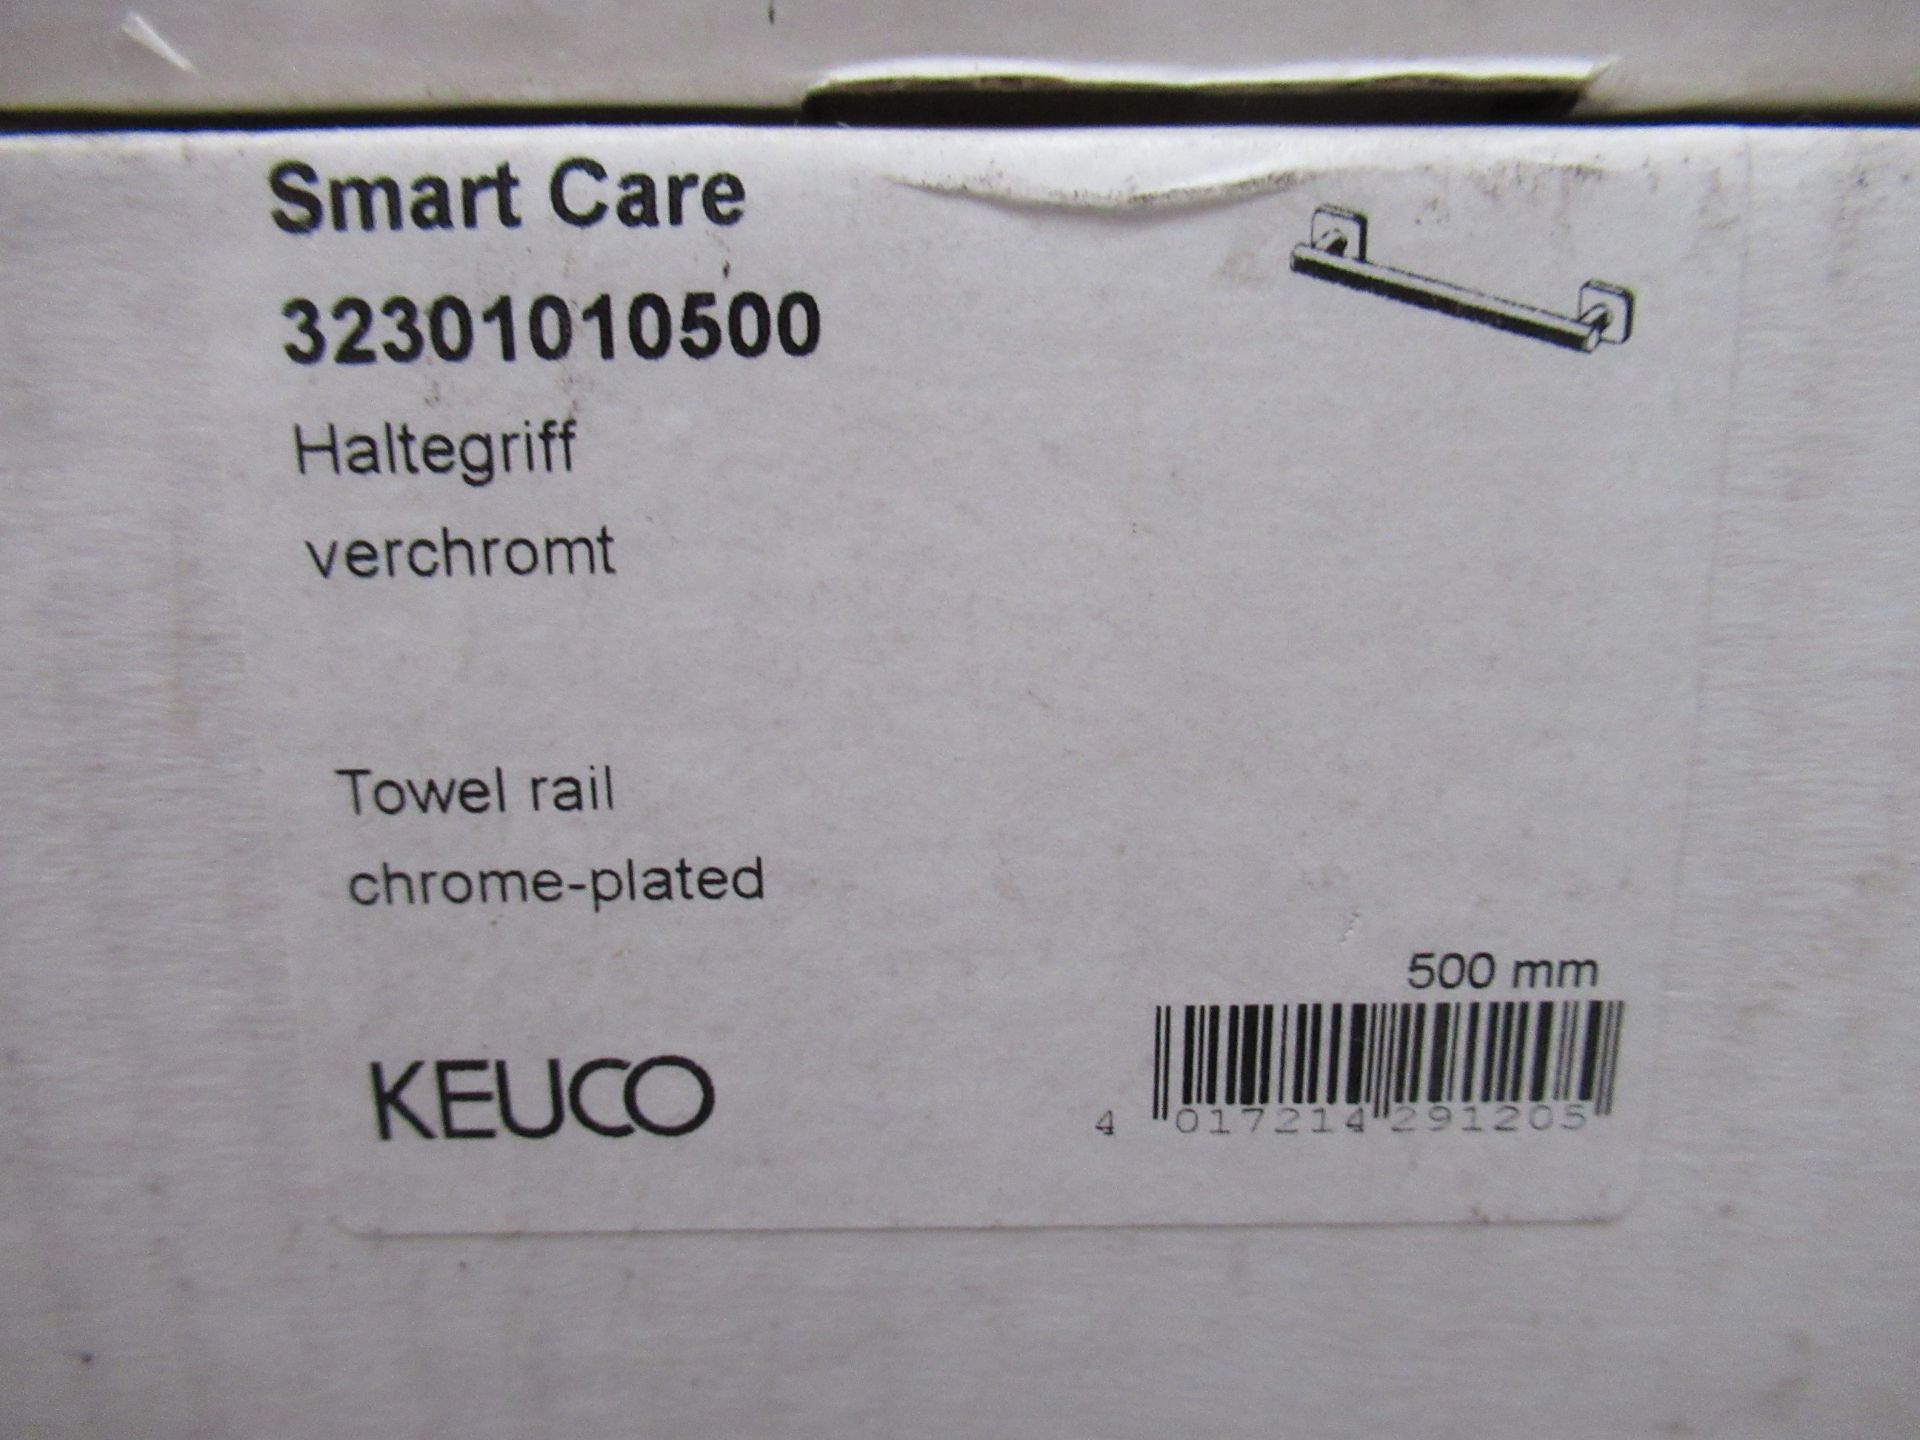 3 x Keuco Smart Care Towel Rail , Chrome Plated, P/N 32301-010500 - Image 2 of 2